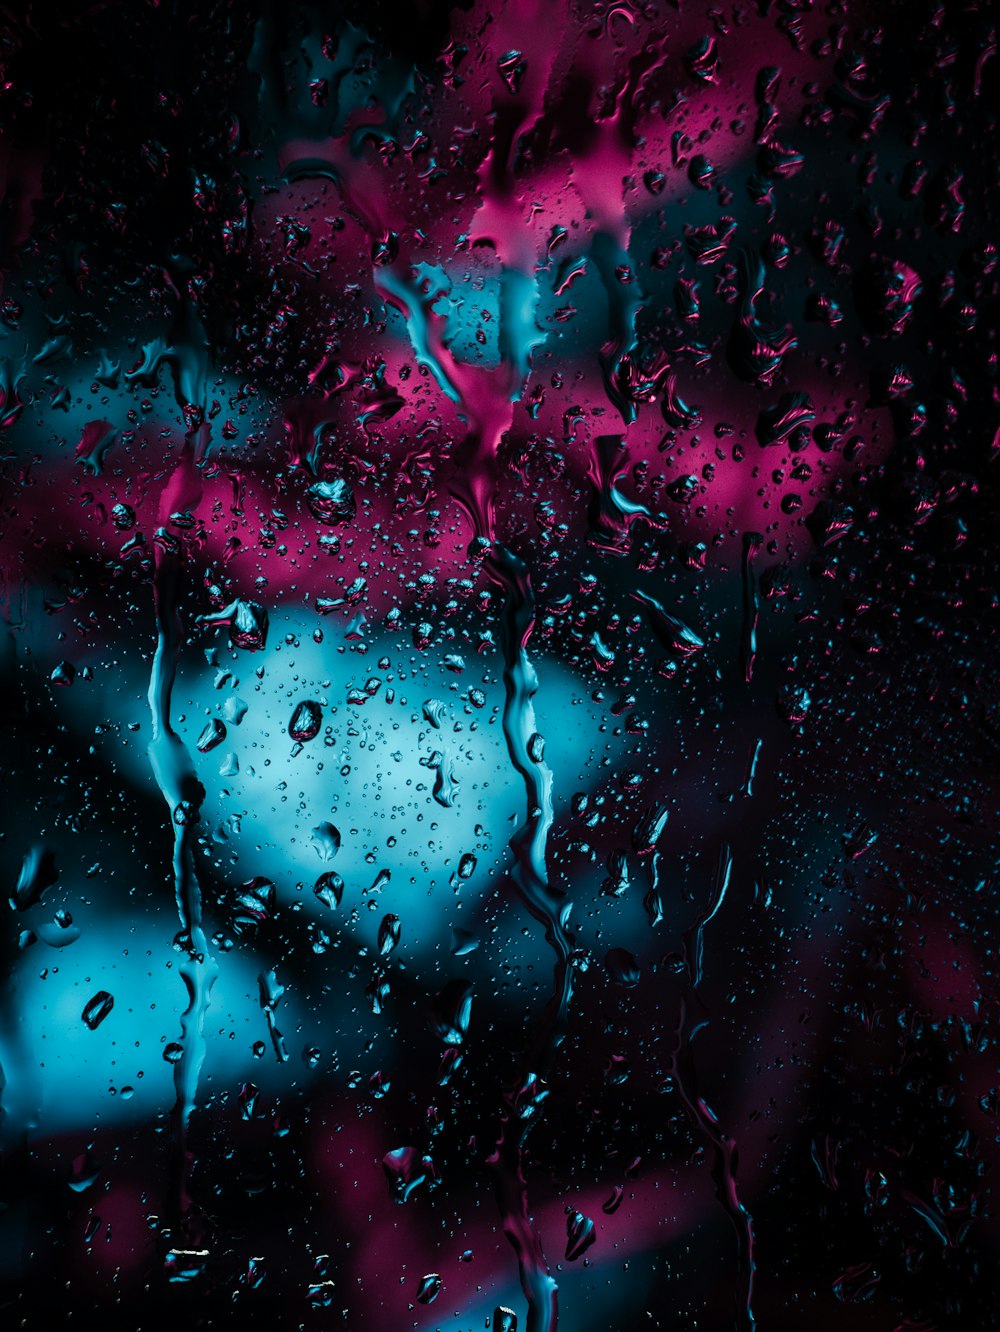 500+ Rain Drop Pictures [HD] | Download Free Images on Unsplash